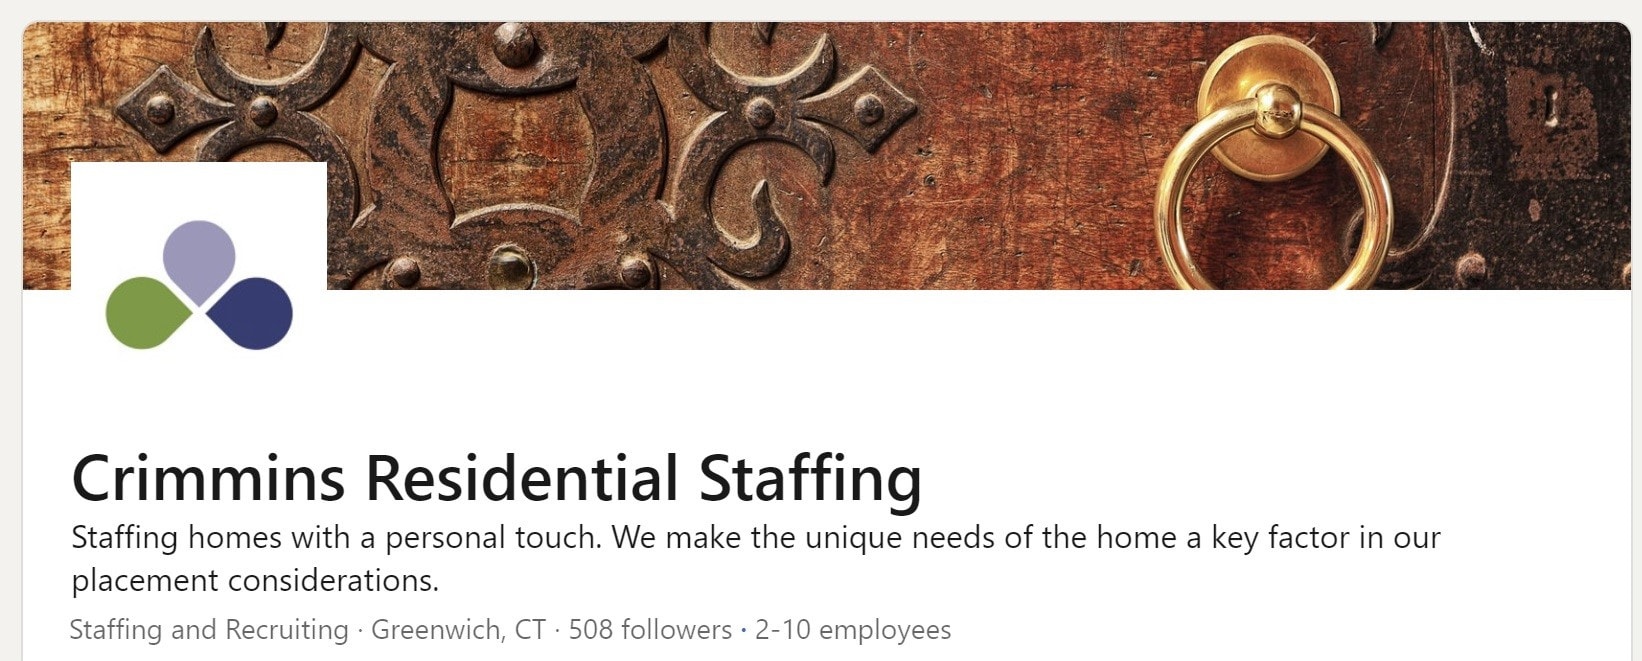 Crimmins Residential Staffing on LinkedIn